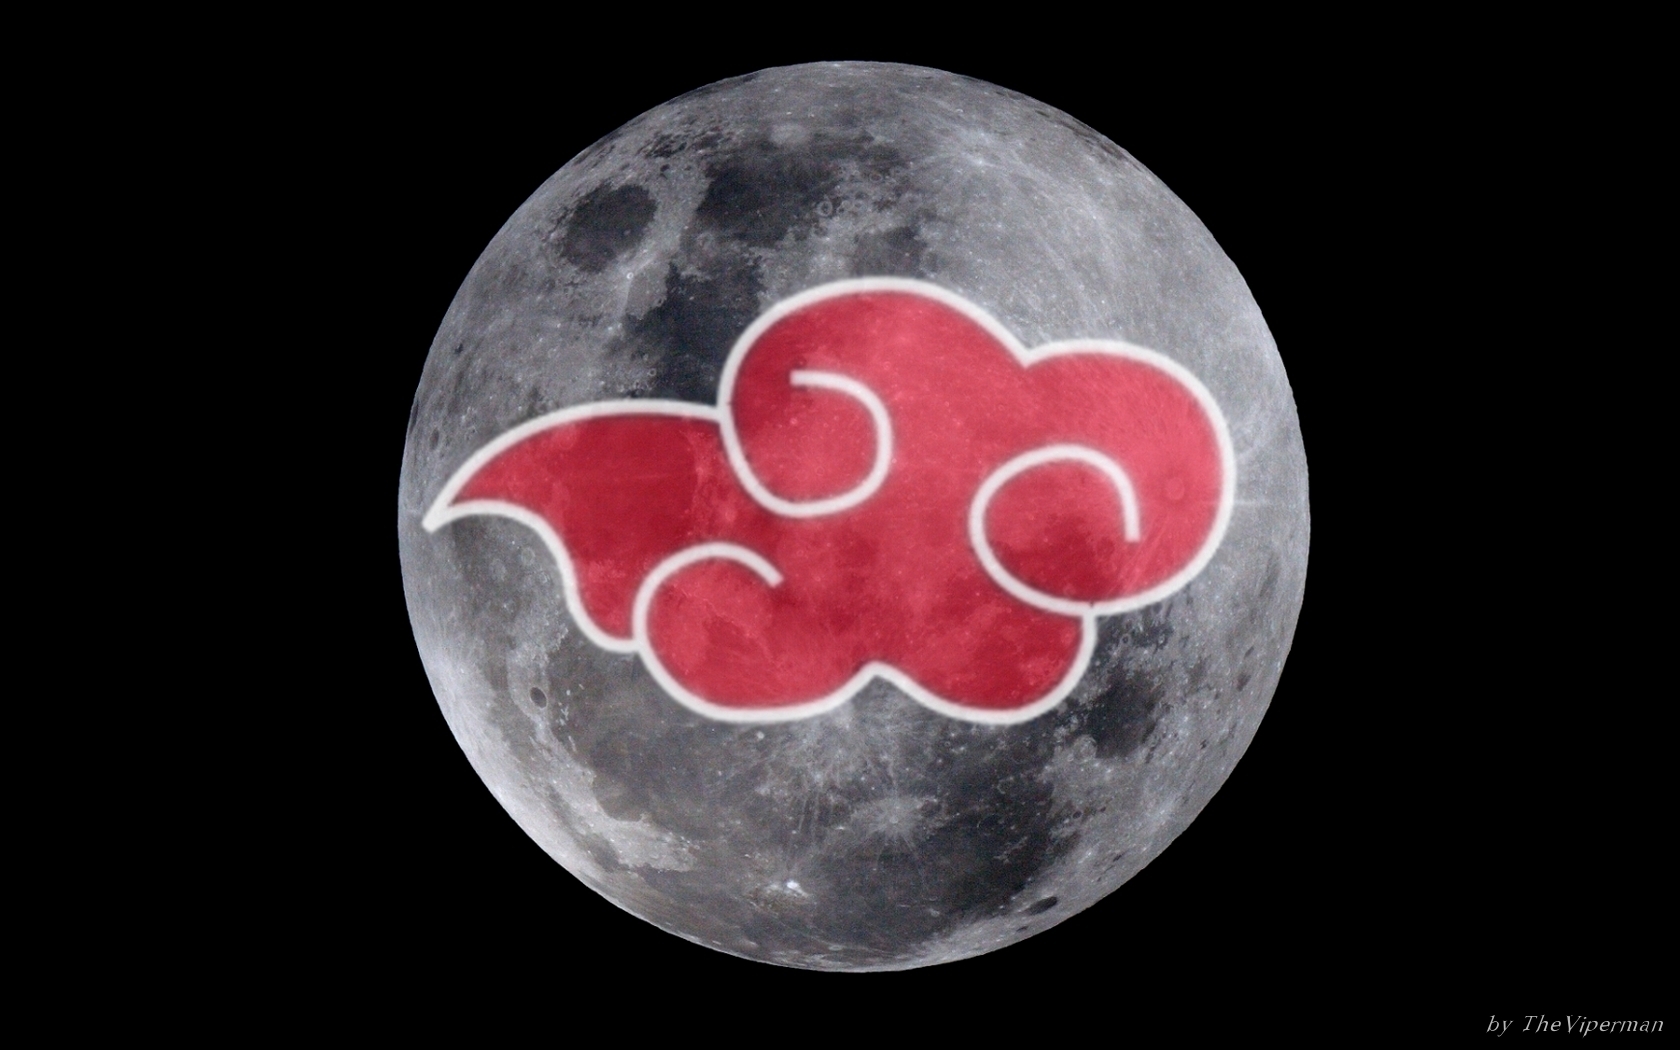 moon with akatsuki cloud - Akatsuki Photo (27811939) - Fanpop